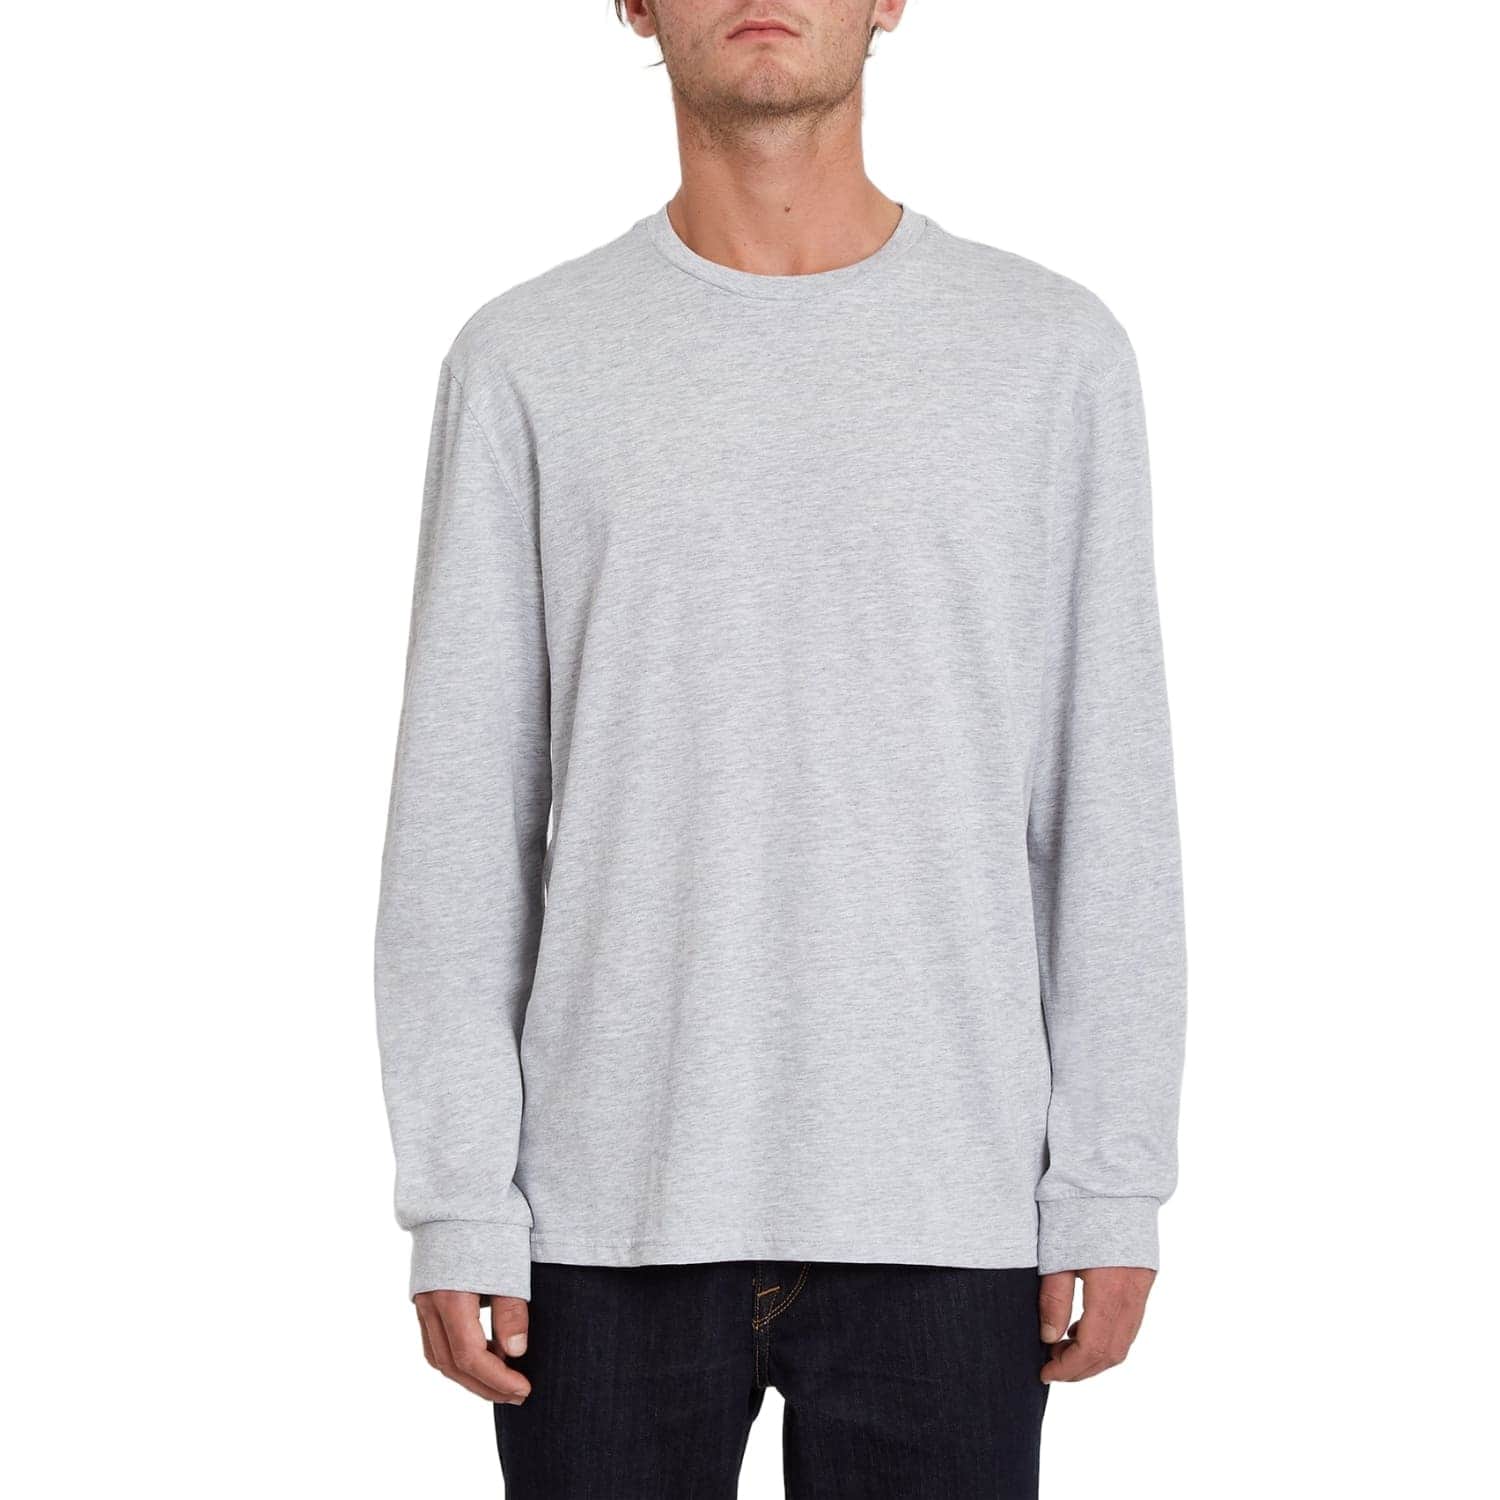 Volcom Iconic Stone Long Sleeve T-Shirt - Heather Grey - Mens Surf Brand T-Shirt by Volcom